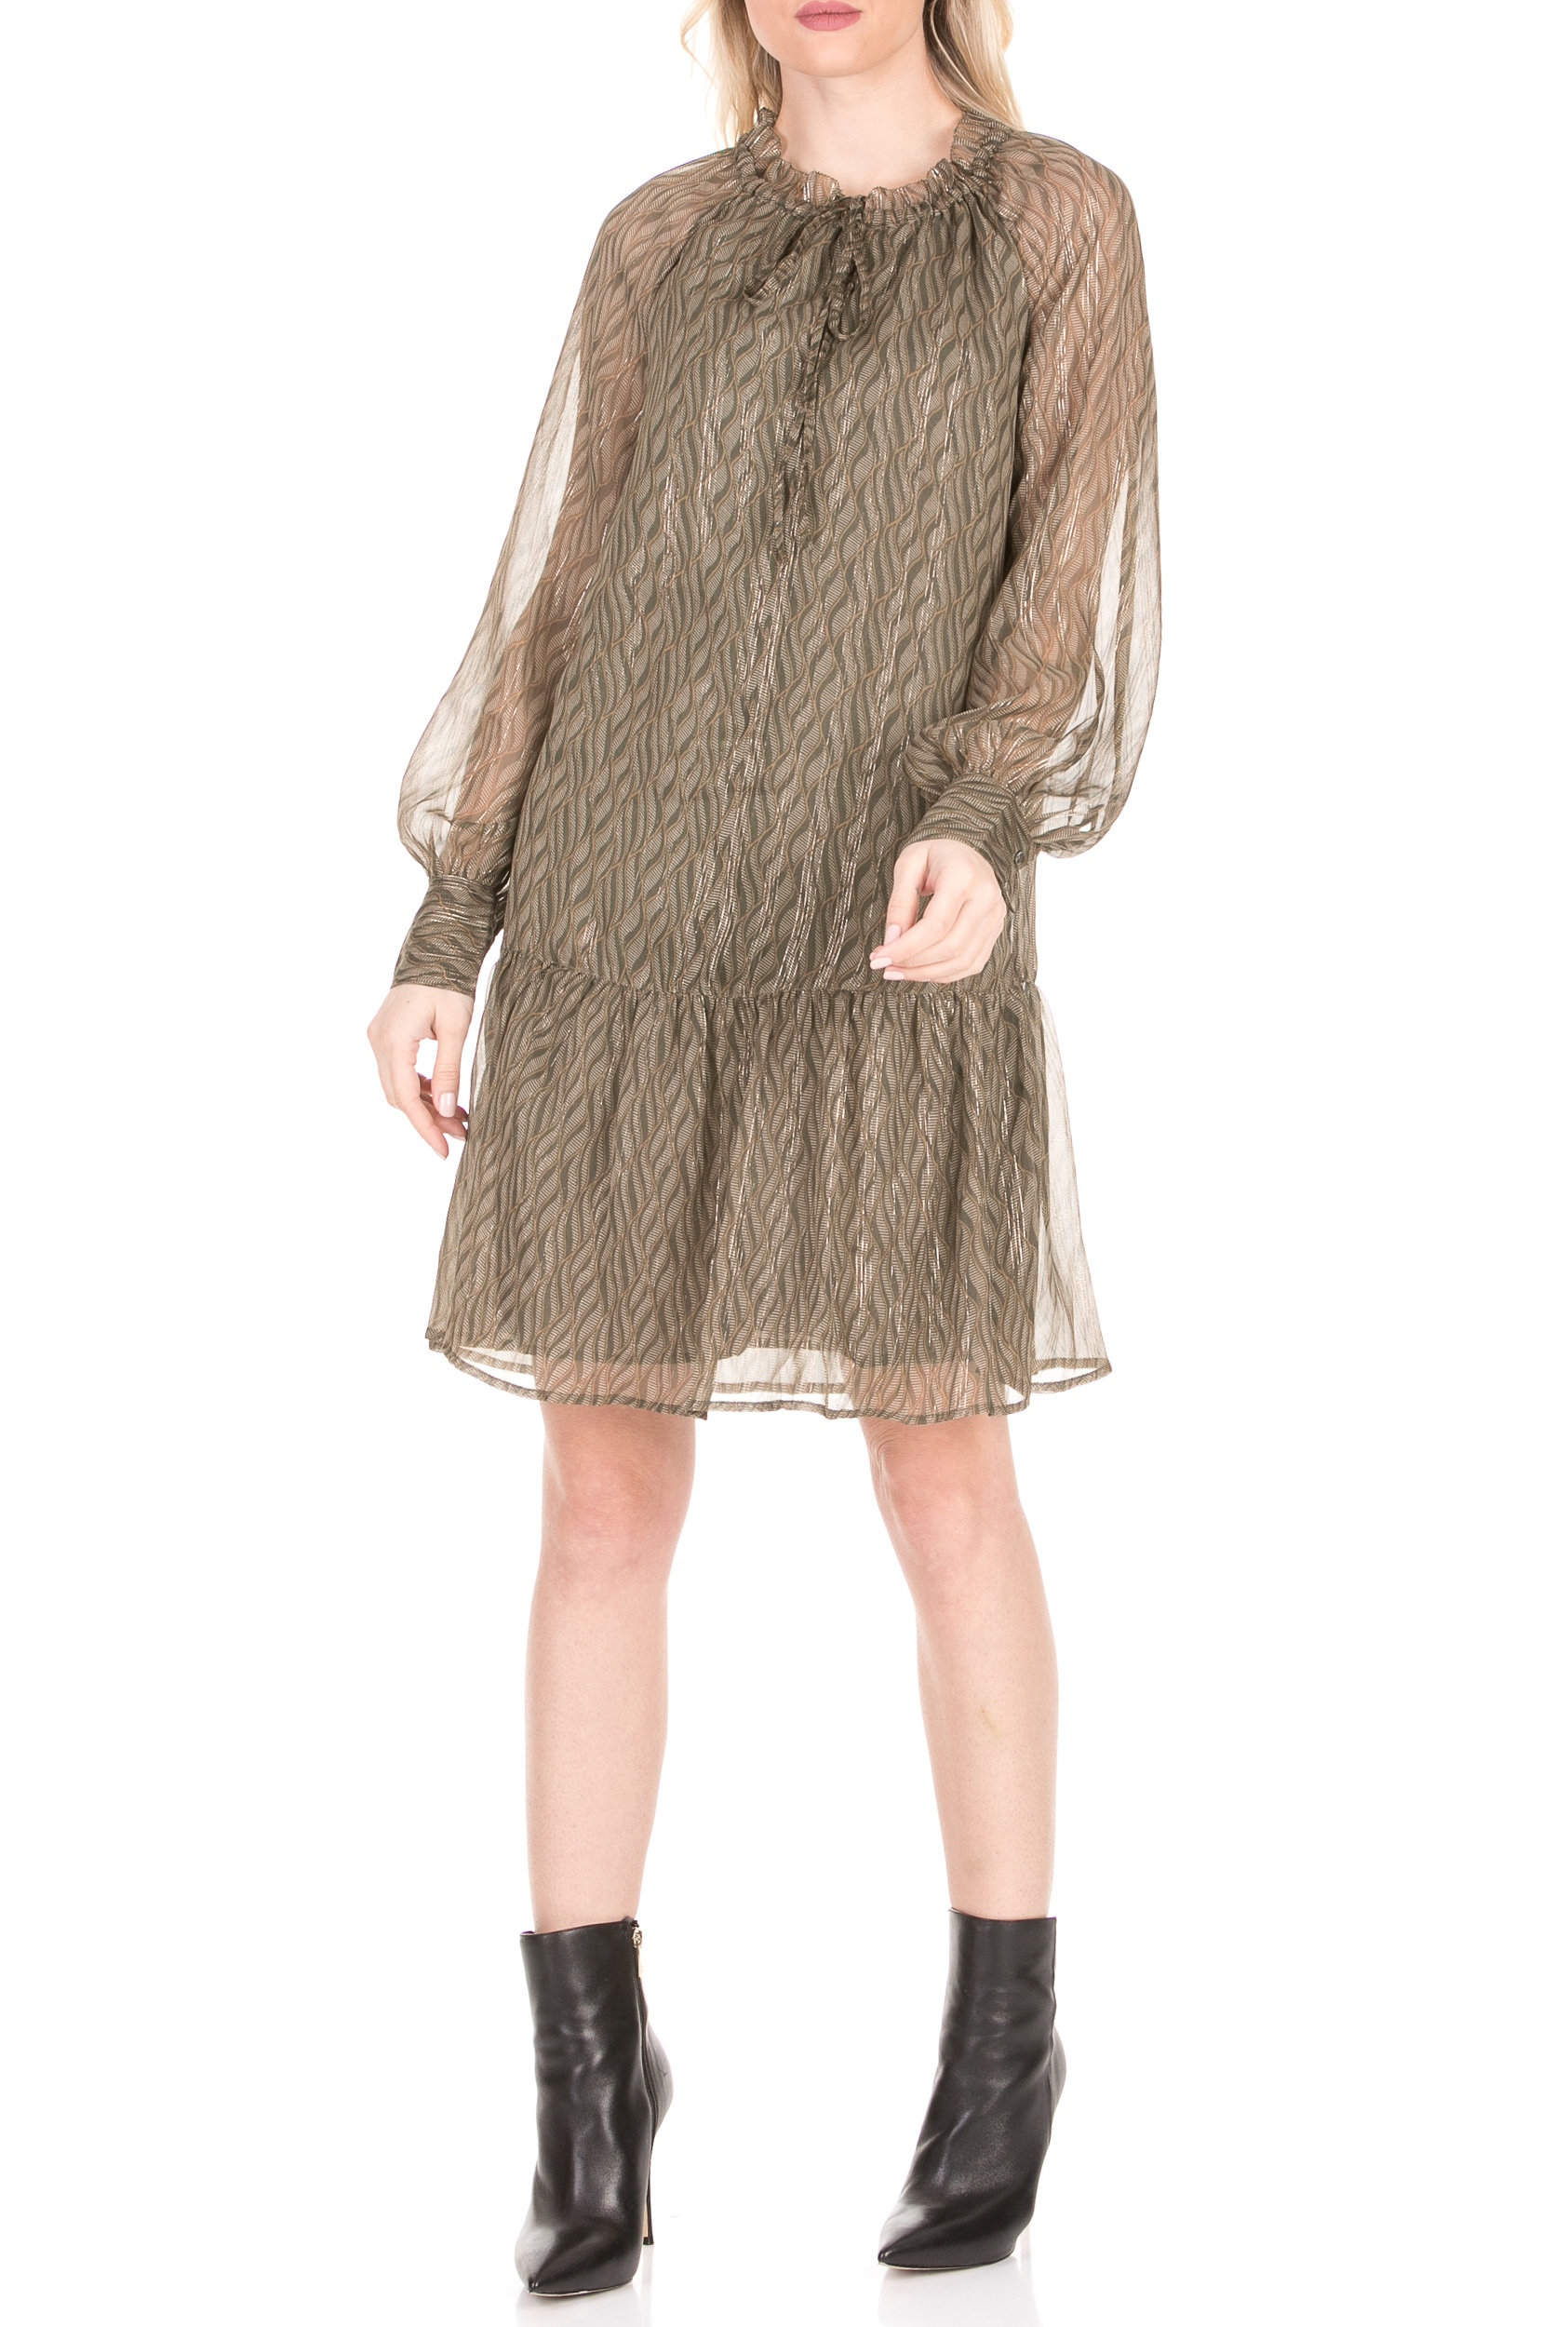 SCOTCH & SODA SCOTCH & SODA - Γυναικείο μίνι φόρεμα Lurex printed dress with peplu SCOTCH & SODA καφέ-μαύρο